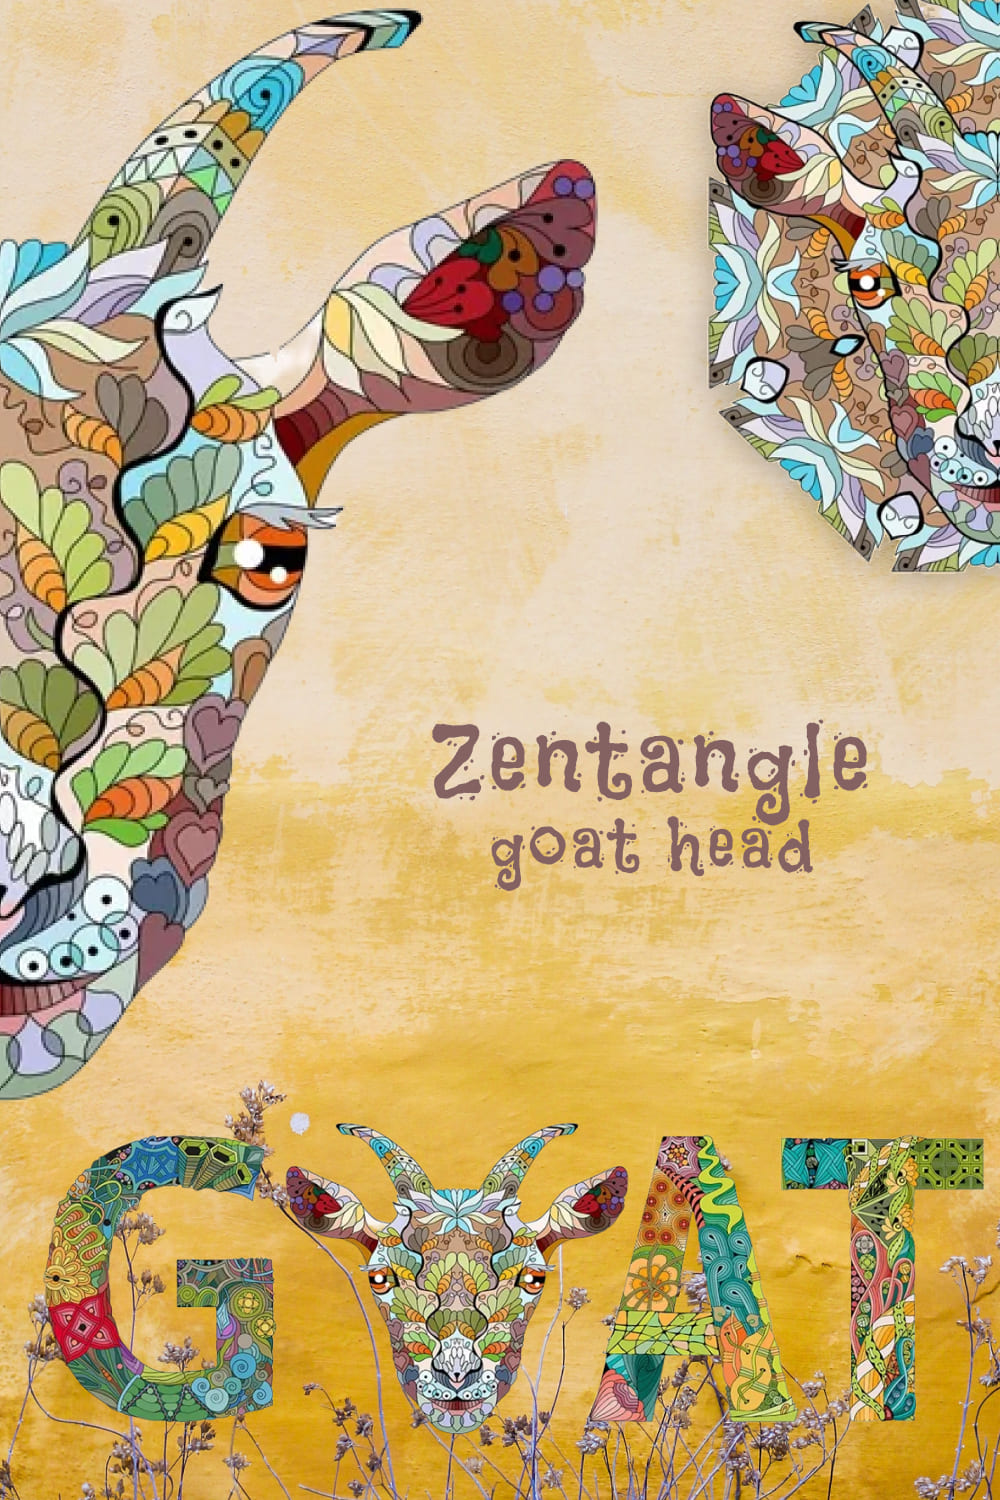 Zentangle Goat Head pinterest image.